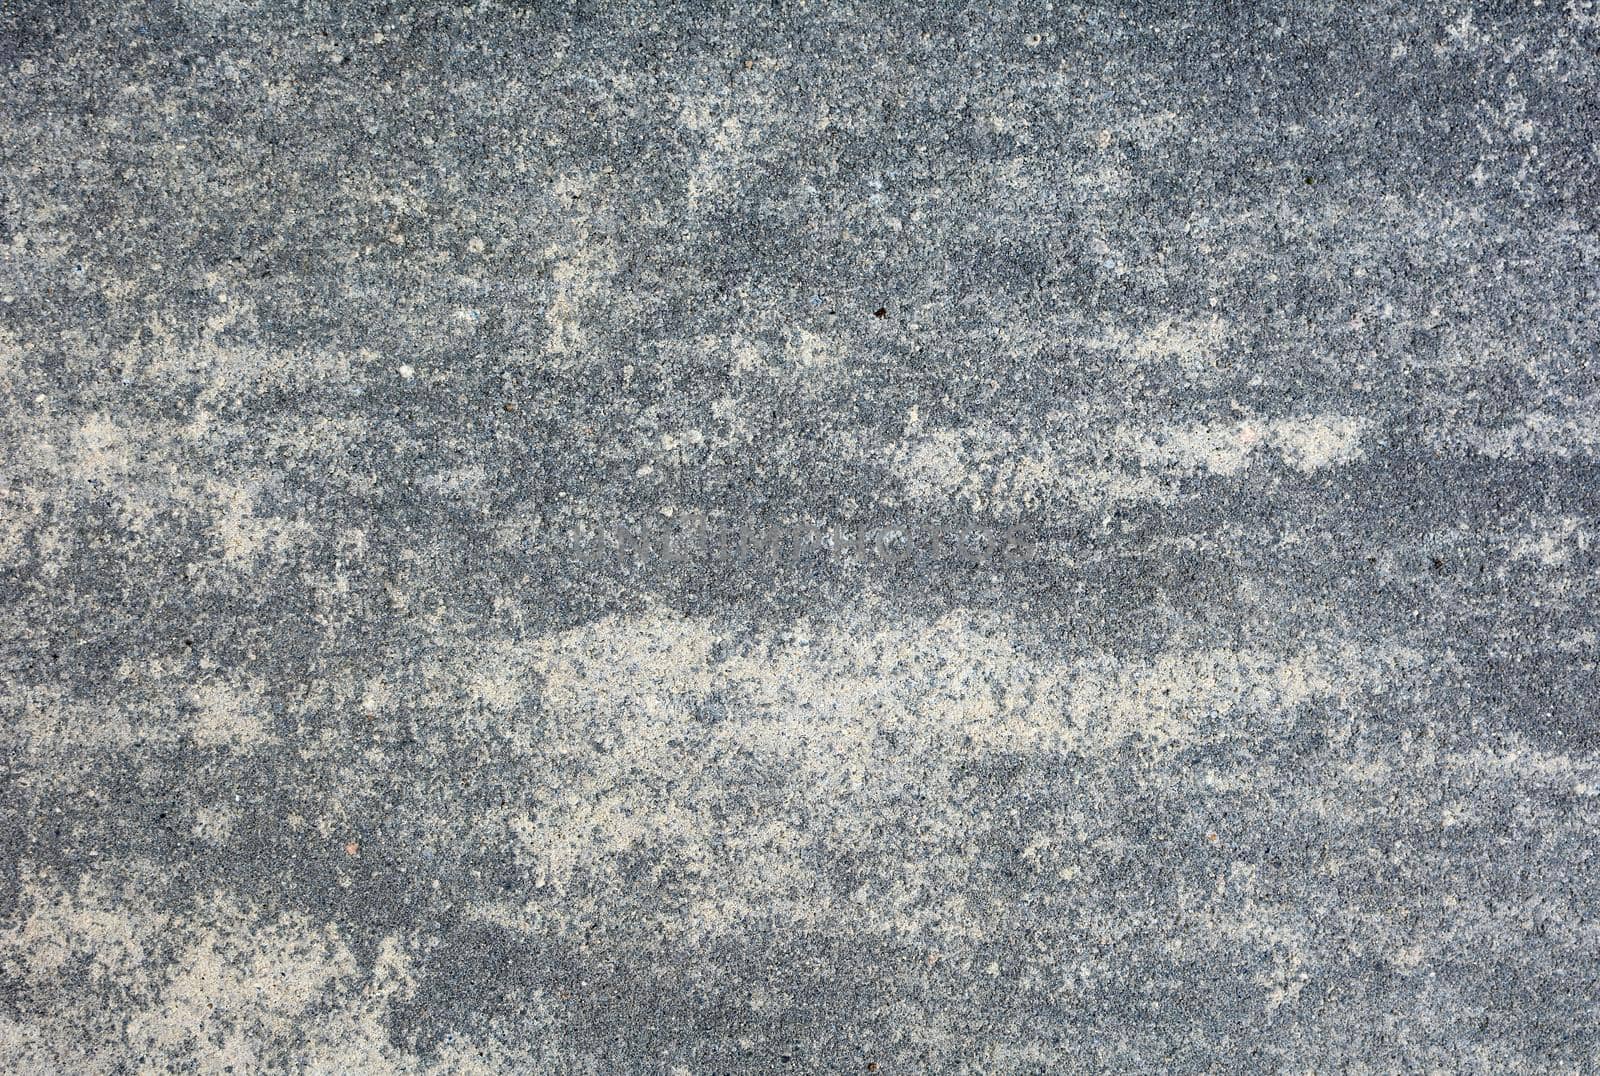 Gray concrete tile surface background by hamik